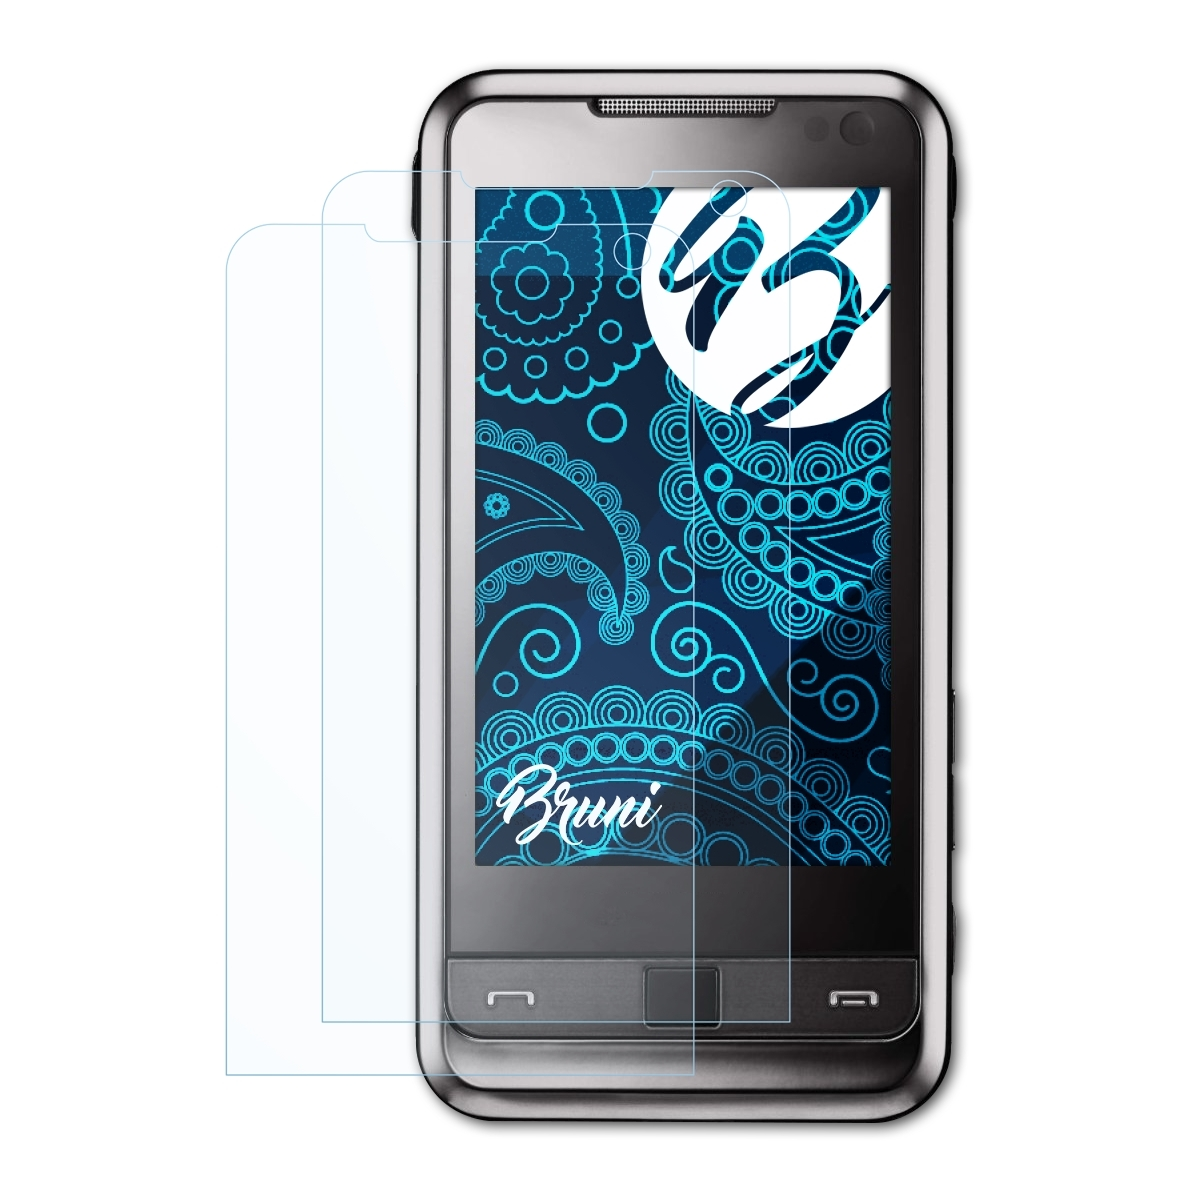 Omnia Schutzfolie(für Samsung BRUNI Basics-Clear (SGH-i900)) 2x